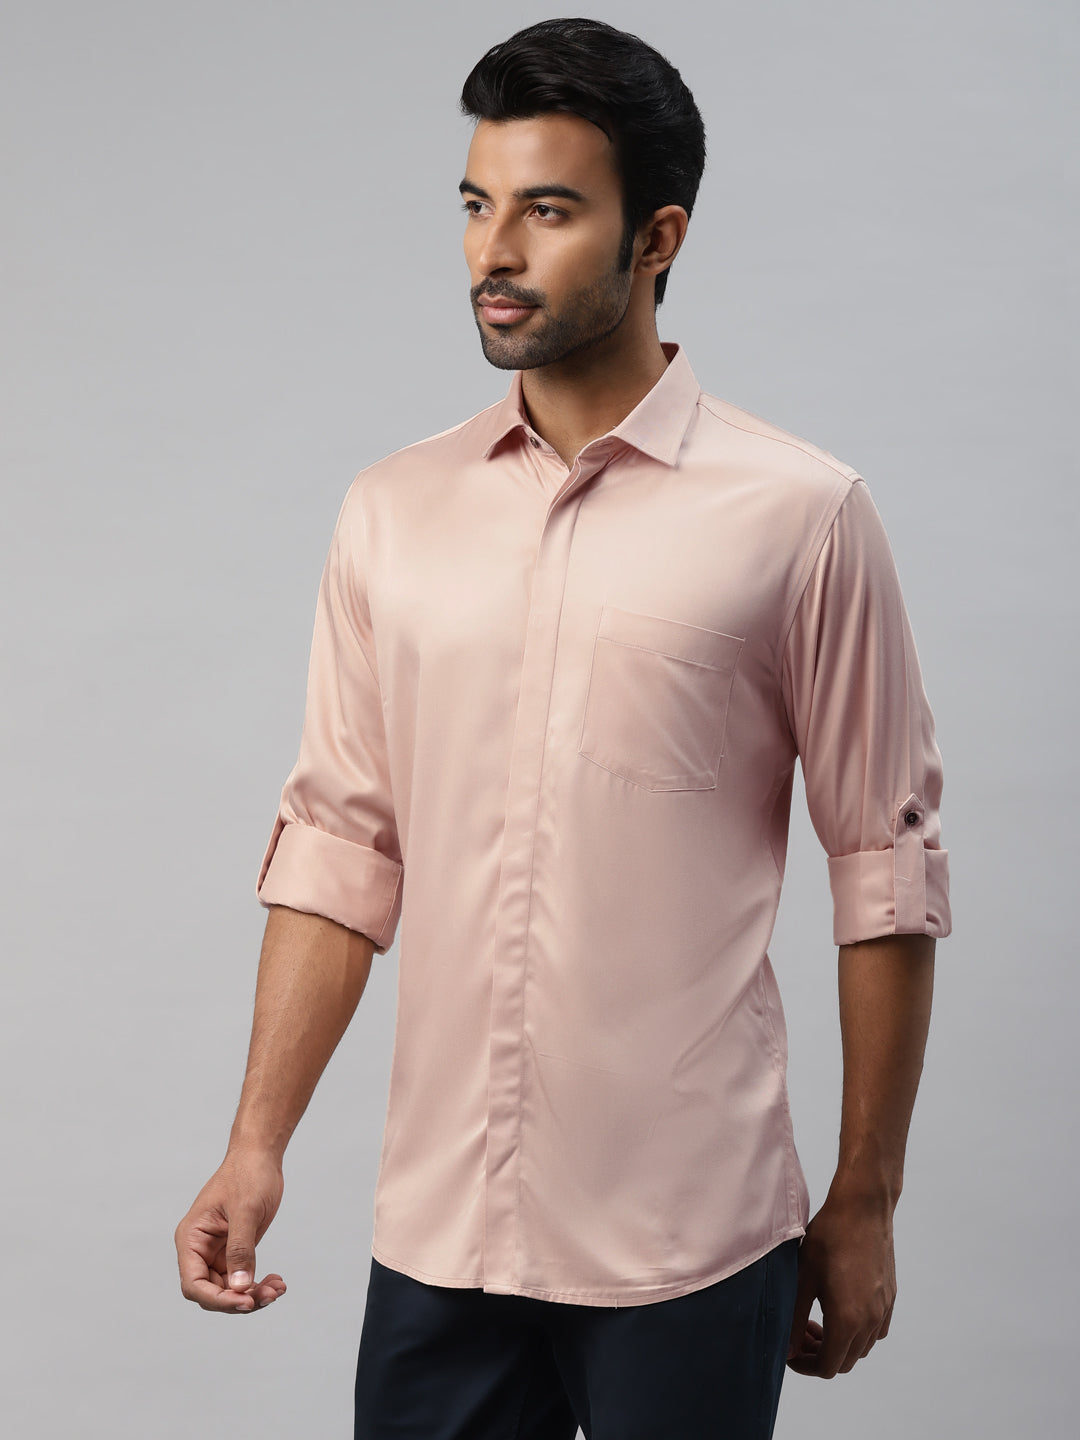 Don Vino Men's Pink Solid Slim Fit Shirt